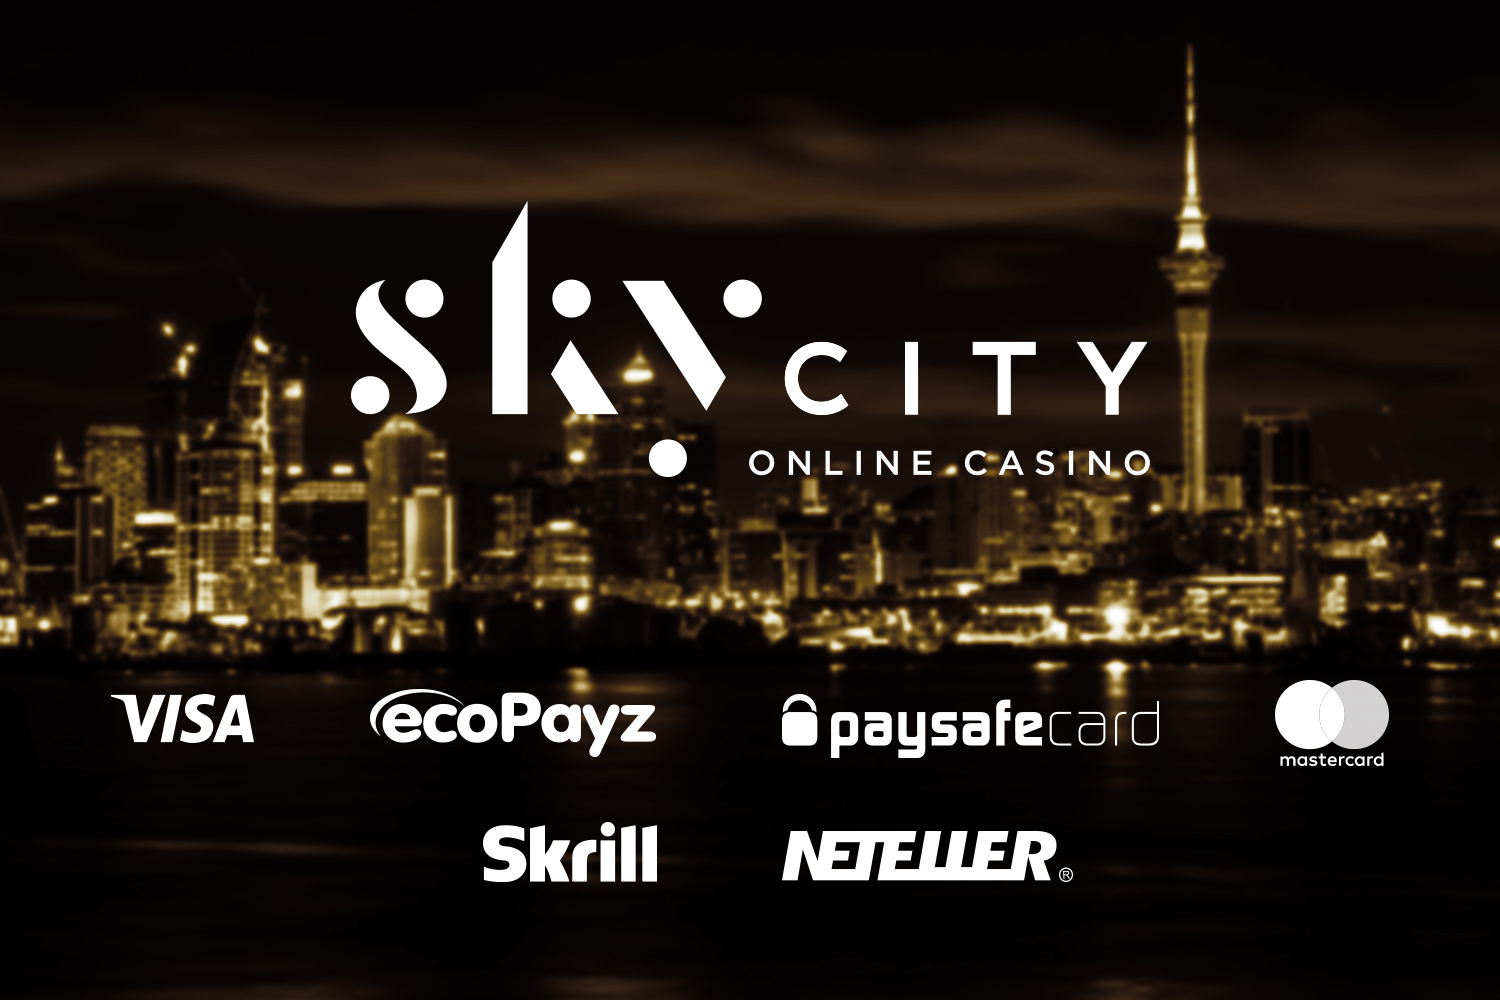 Skycity Online Casino Sign Up